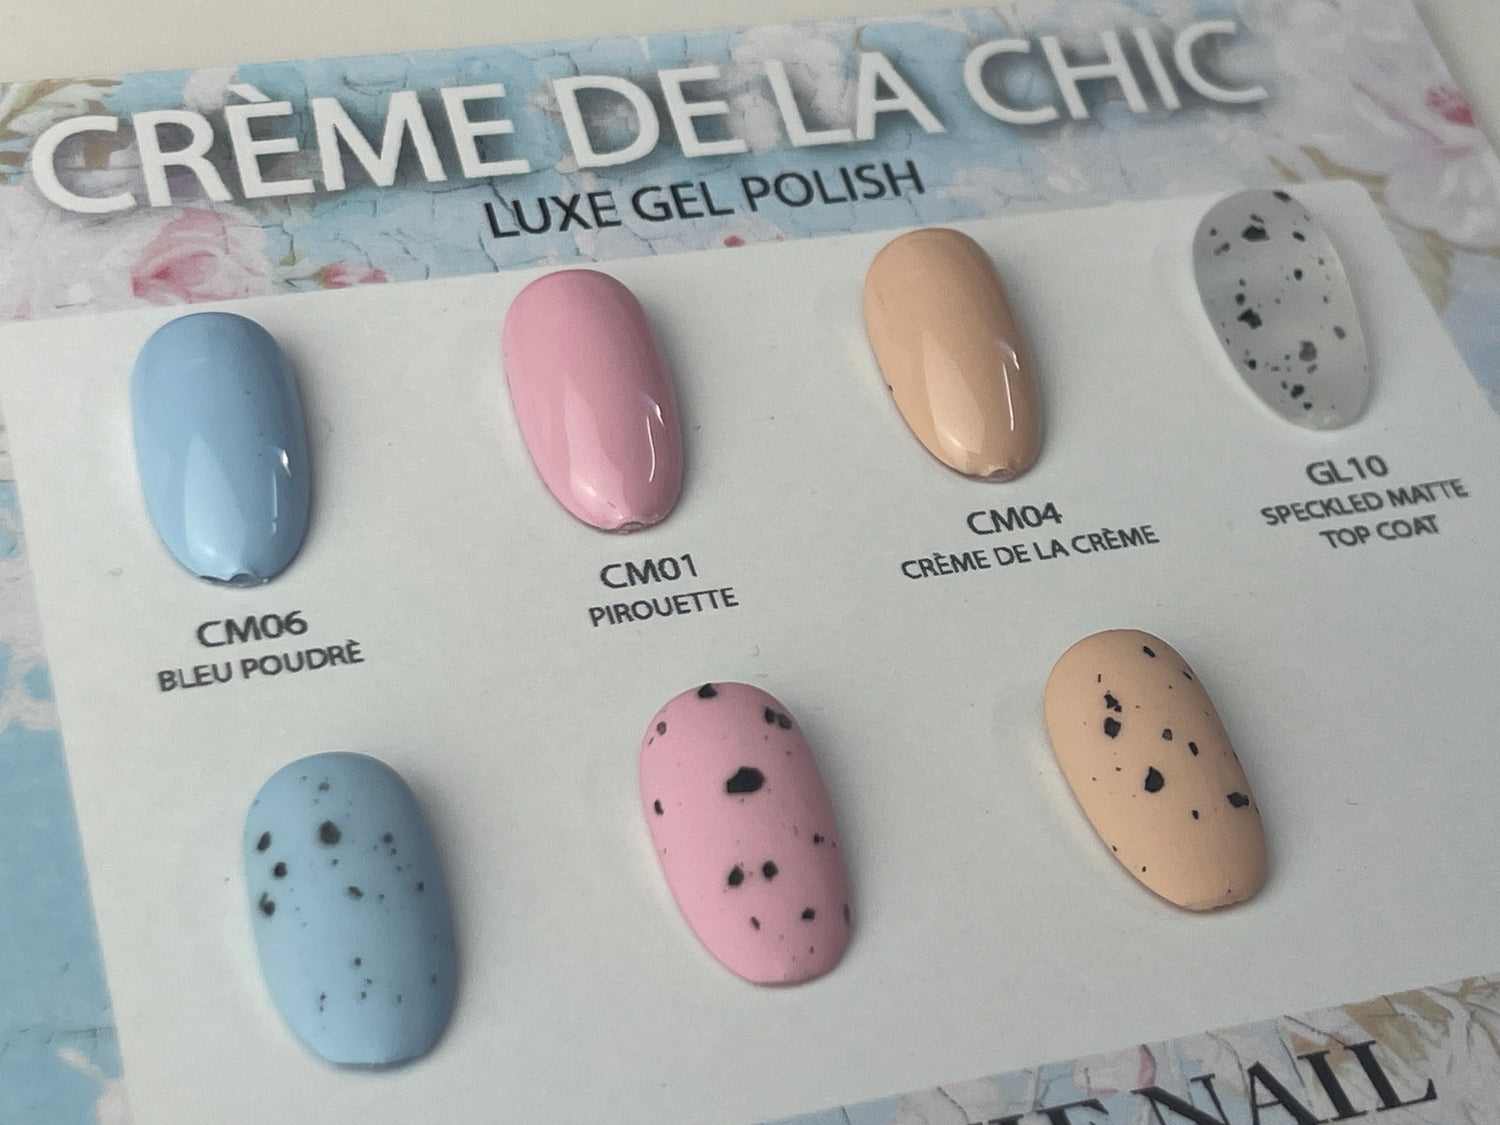 Crème De La Chic Gels